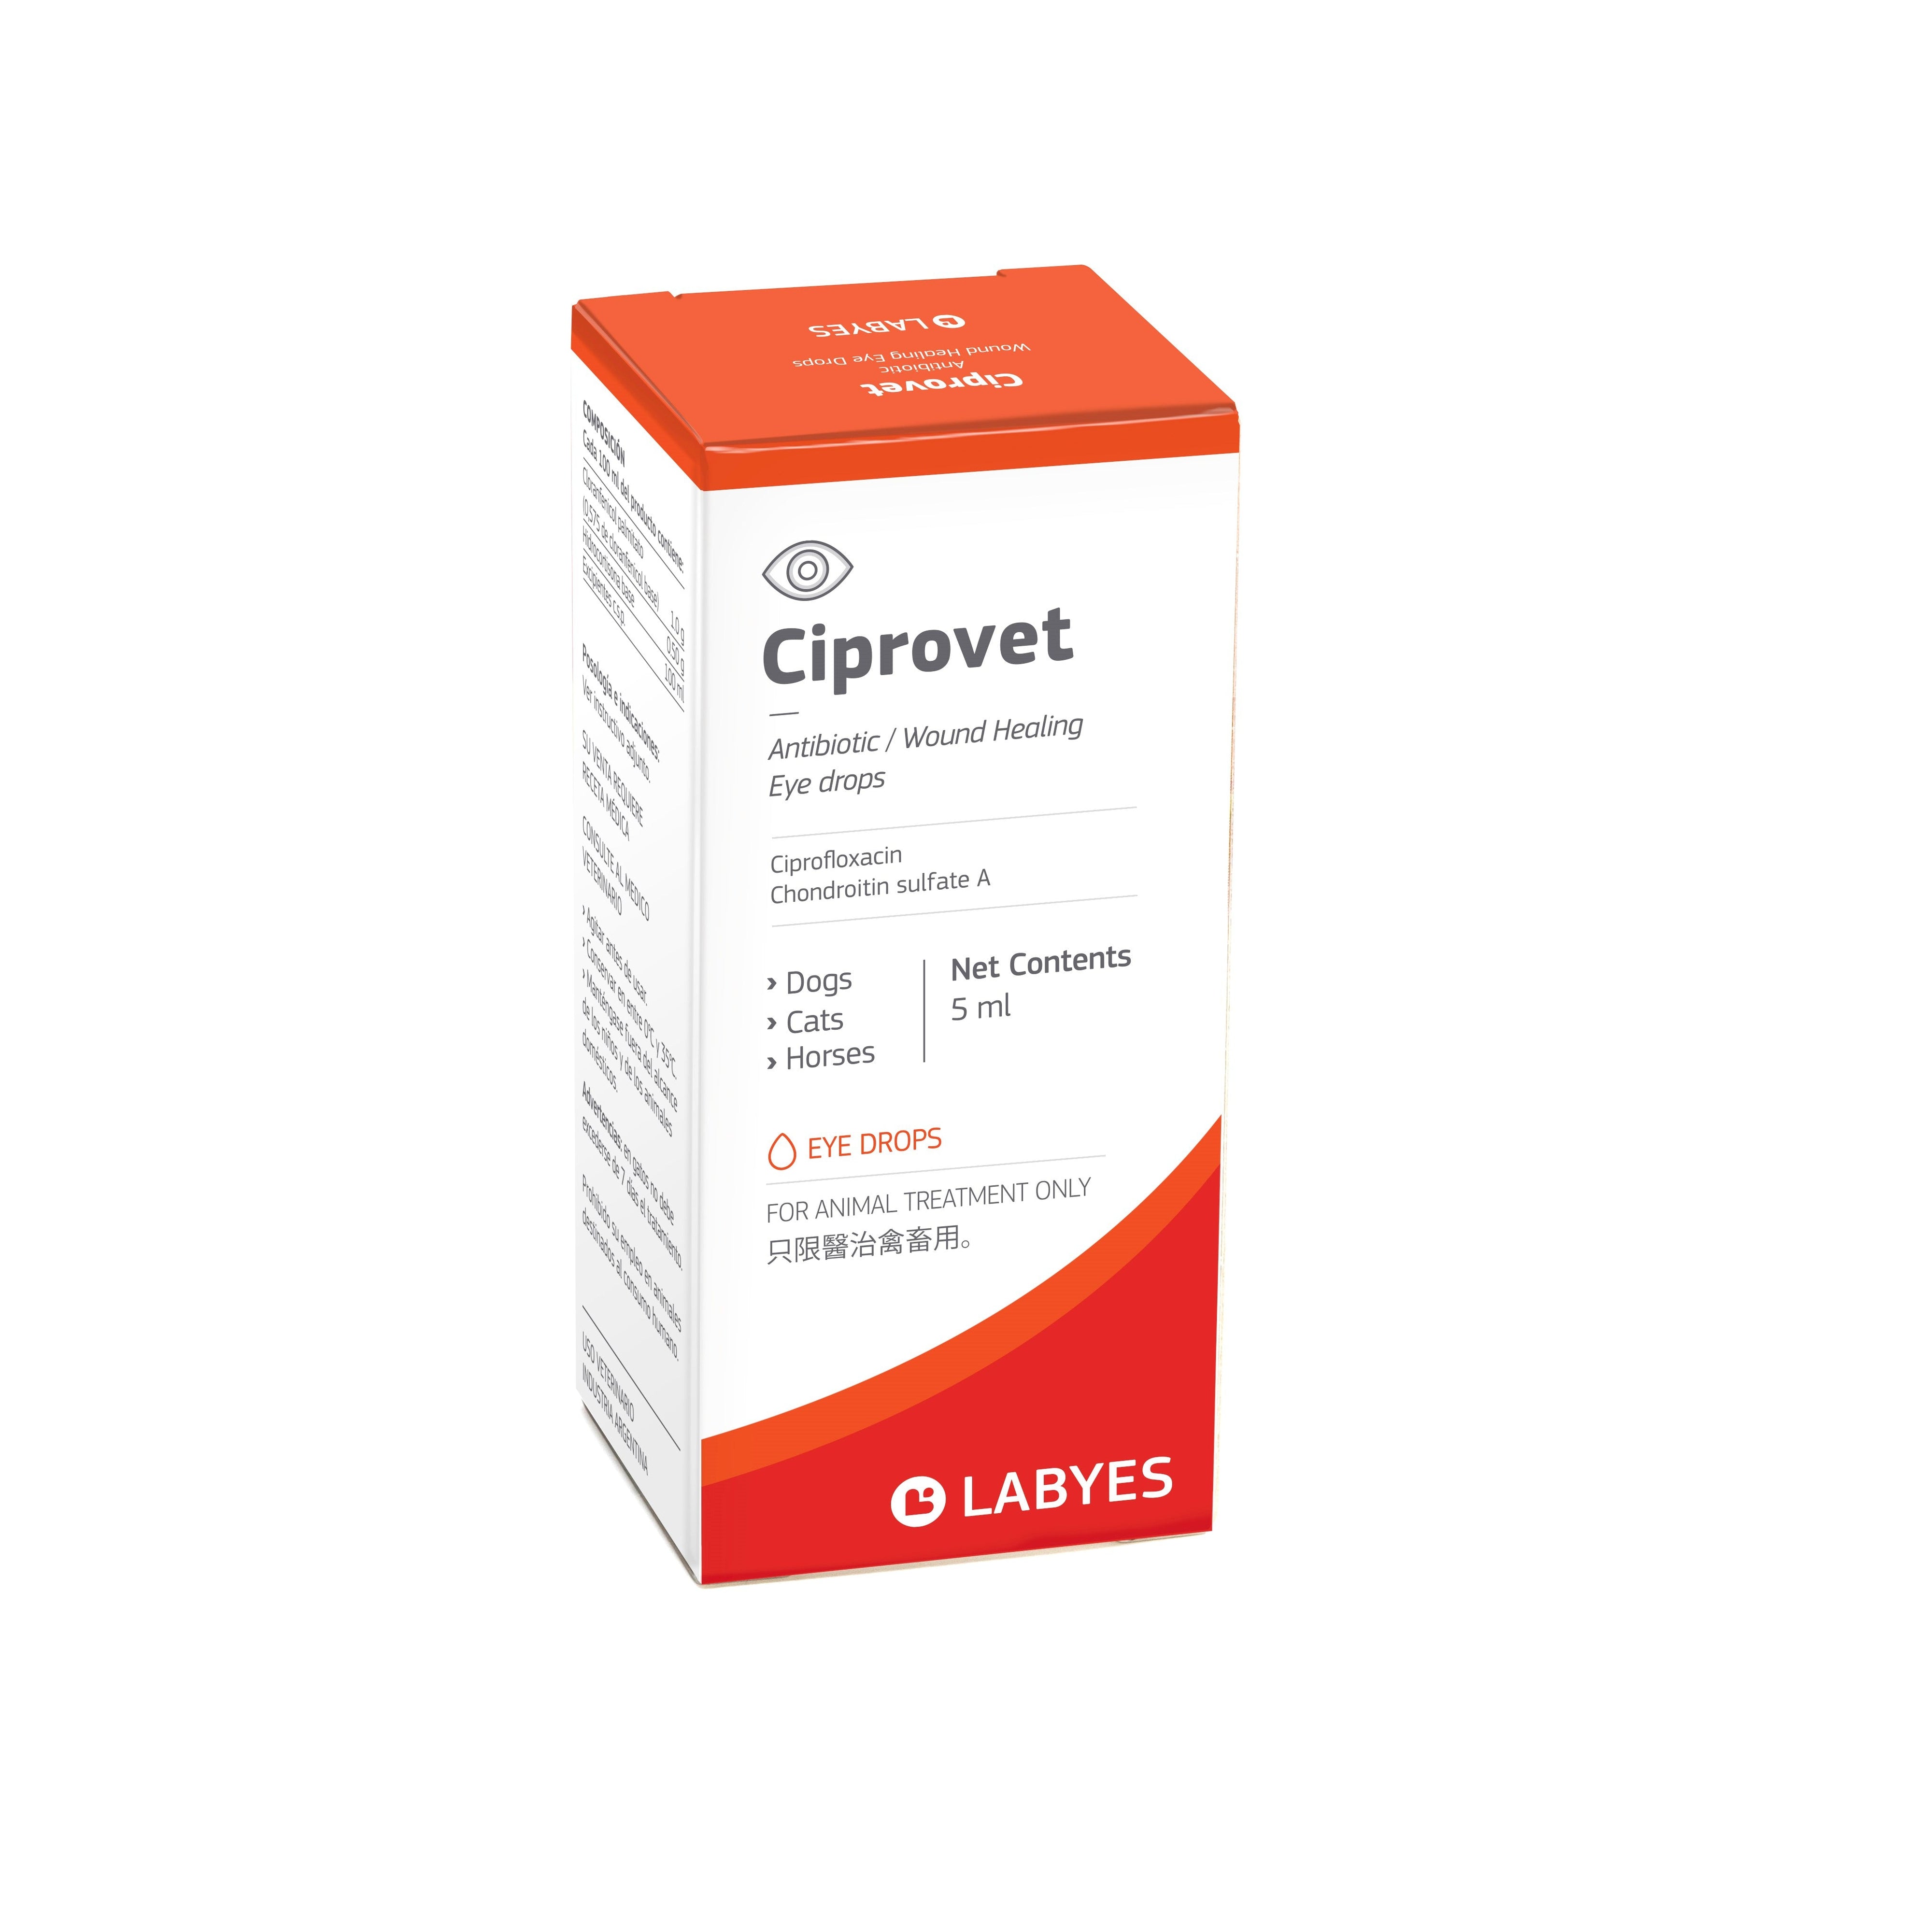 Ciprovet (Chondroitin Sulfate & Ciprofloxacin) Eye Drop 5ml